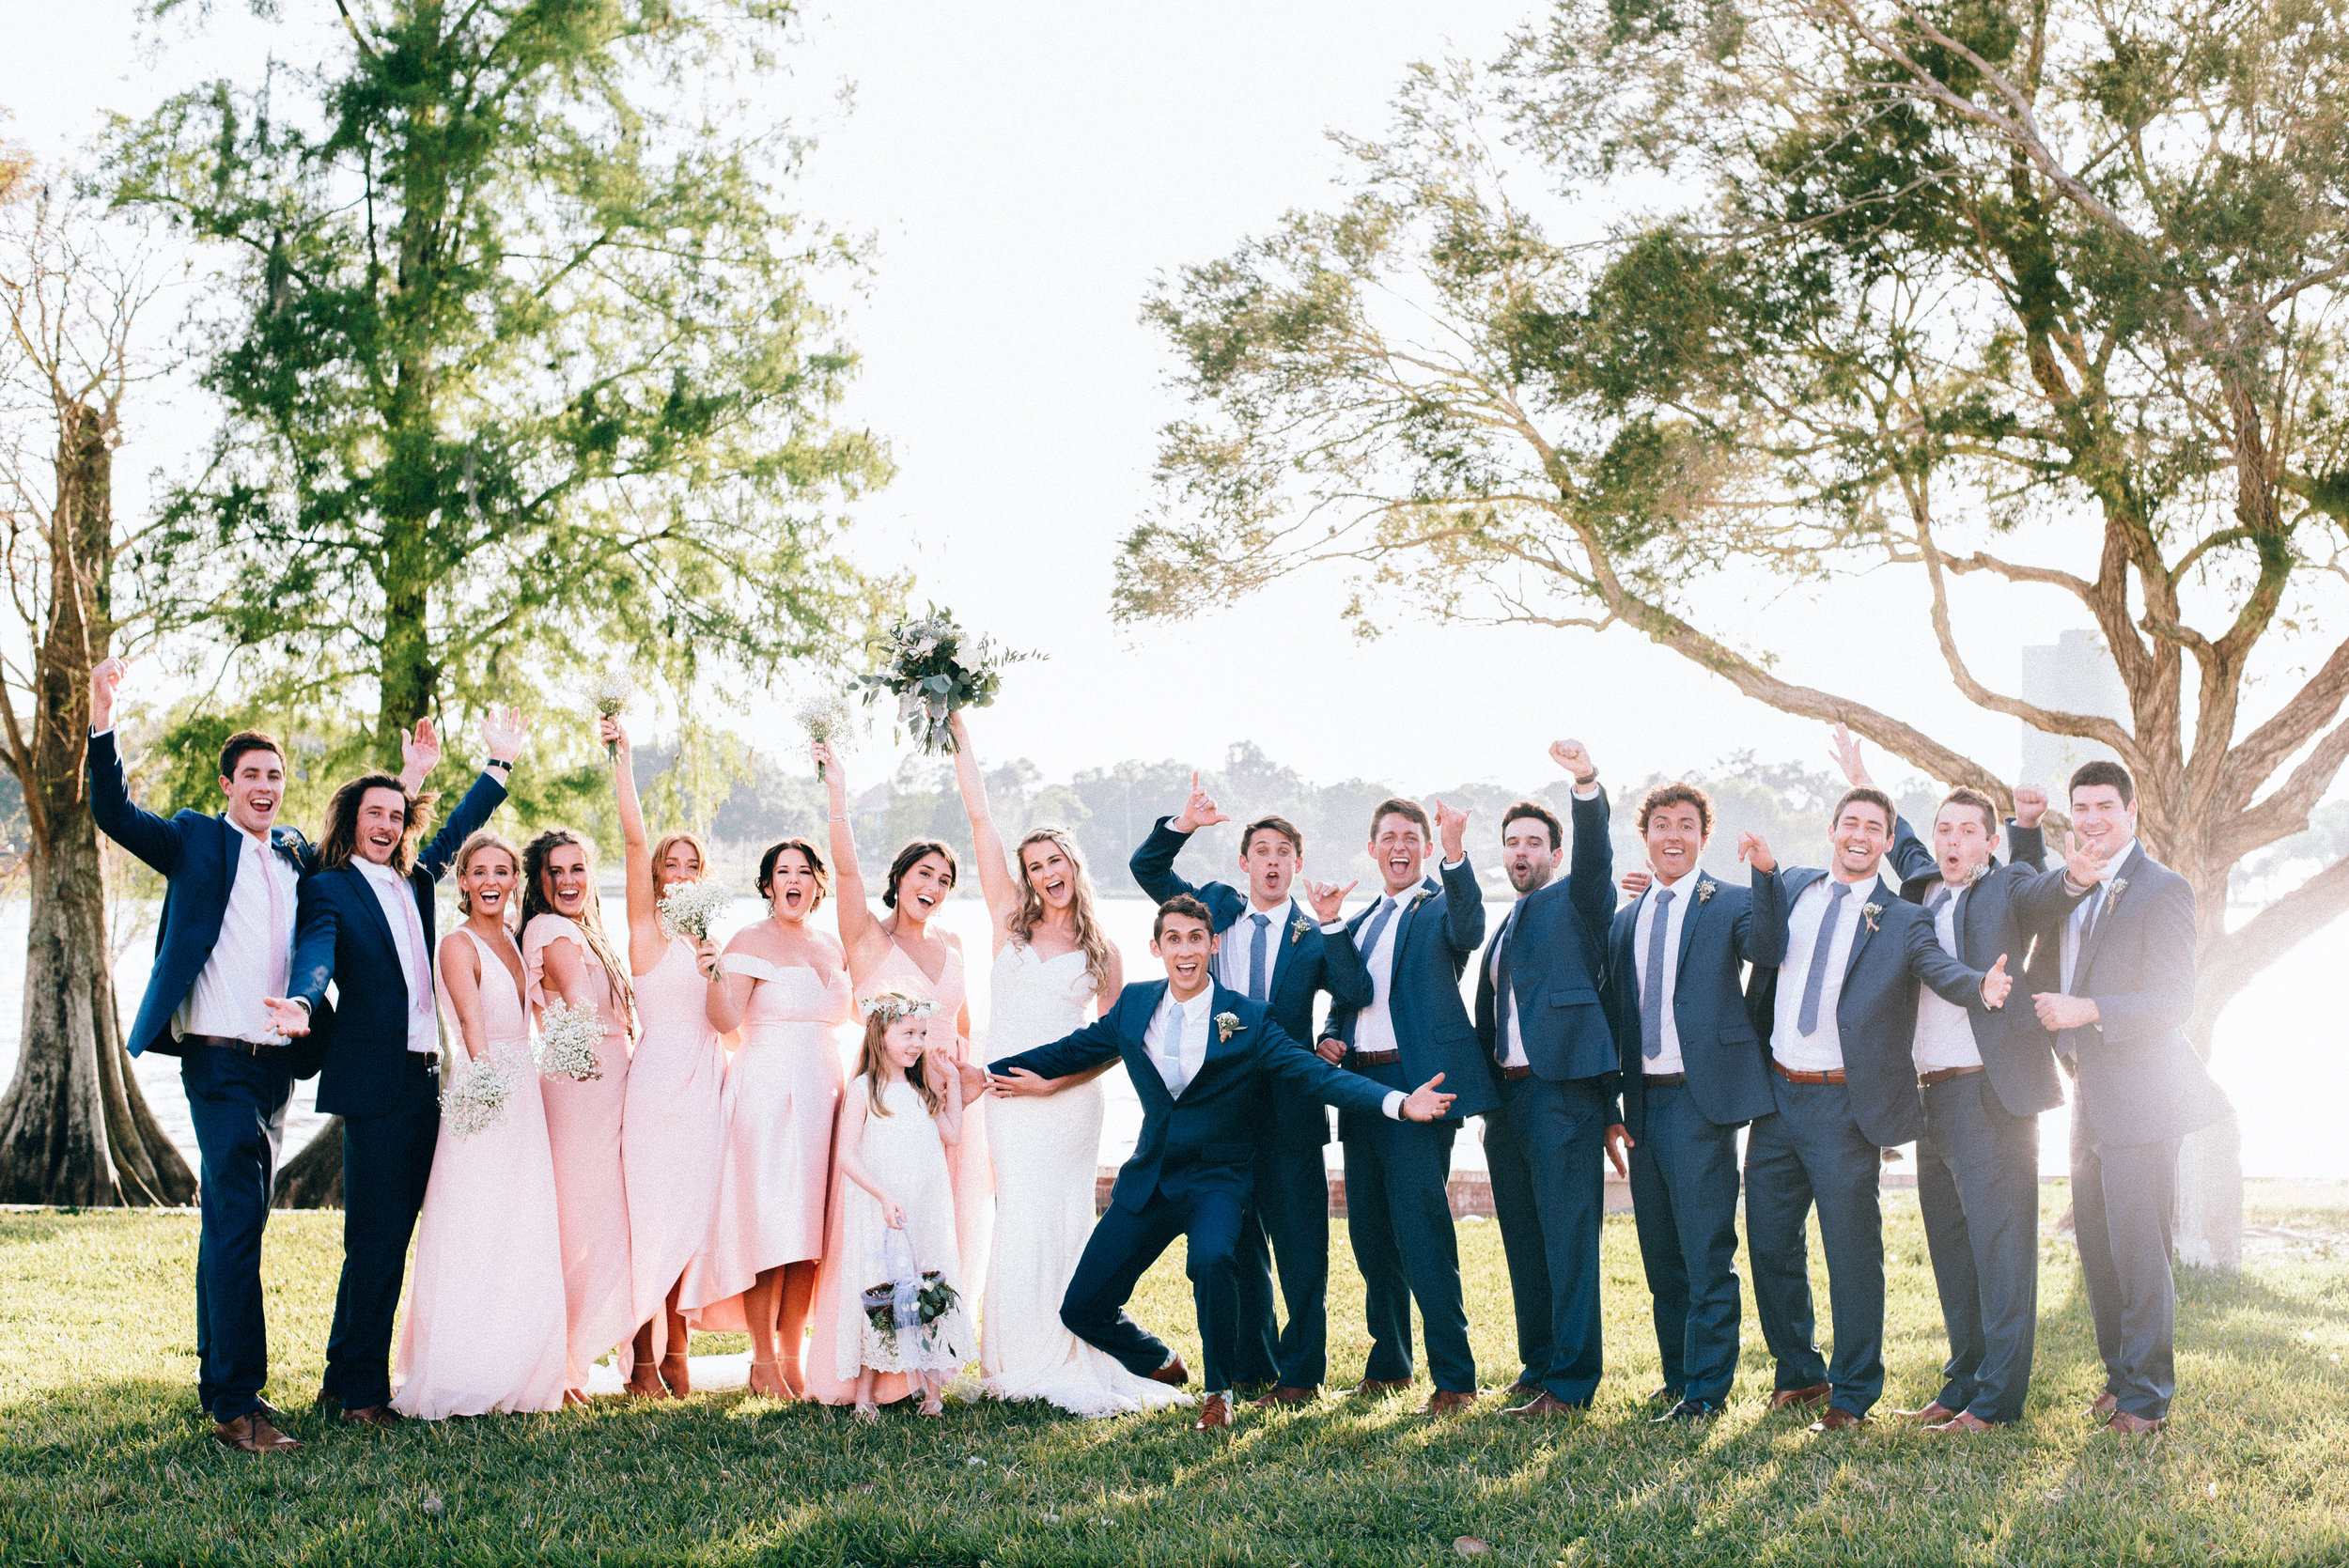 naomi-lynn-photography-lakeland-florida-wedding-nicole-miller-violet-savannah-bridal-boutique-ivory-and-beau-bridal-boutique-savannah-weddings-florida-weddings-australia-bride-southern-wedding-savannah-wedding-planner-28.jpg